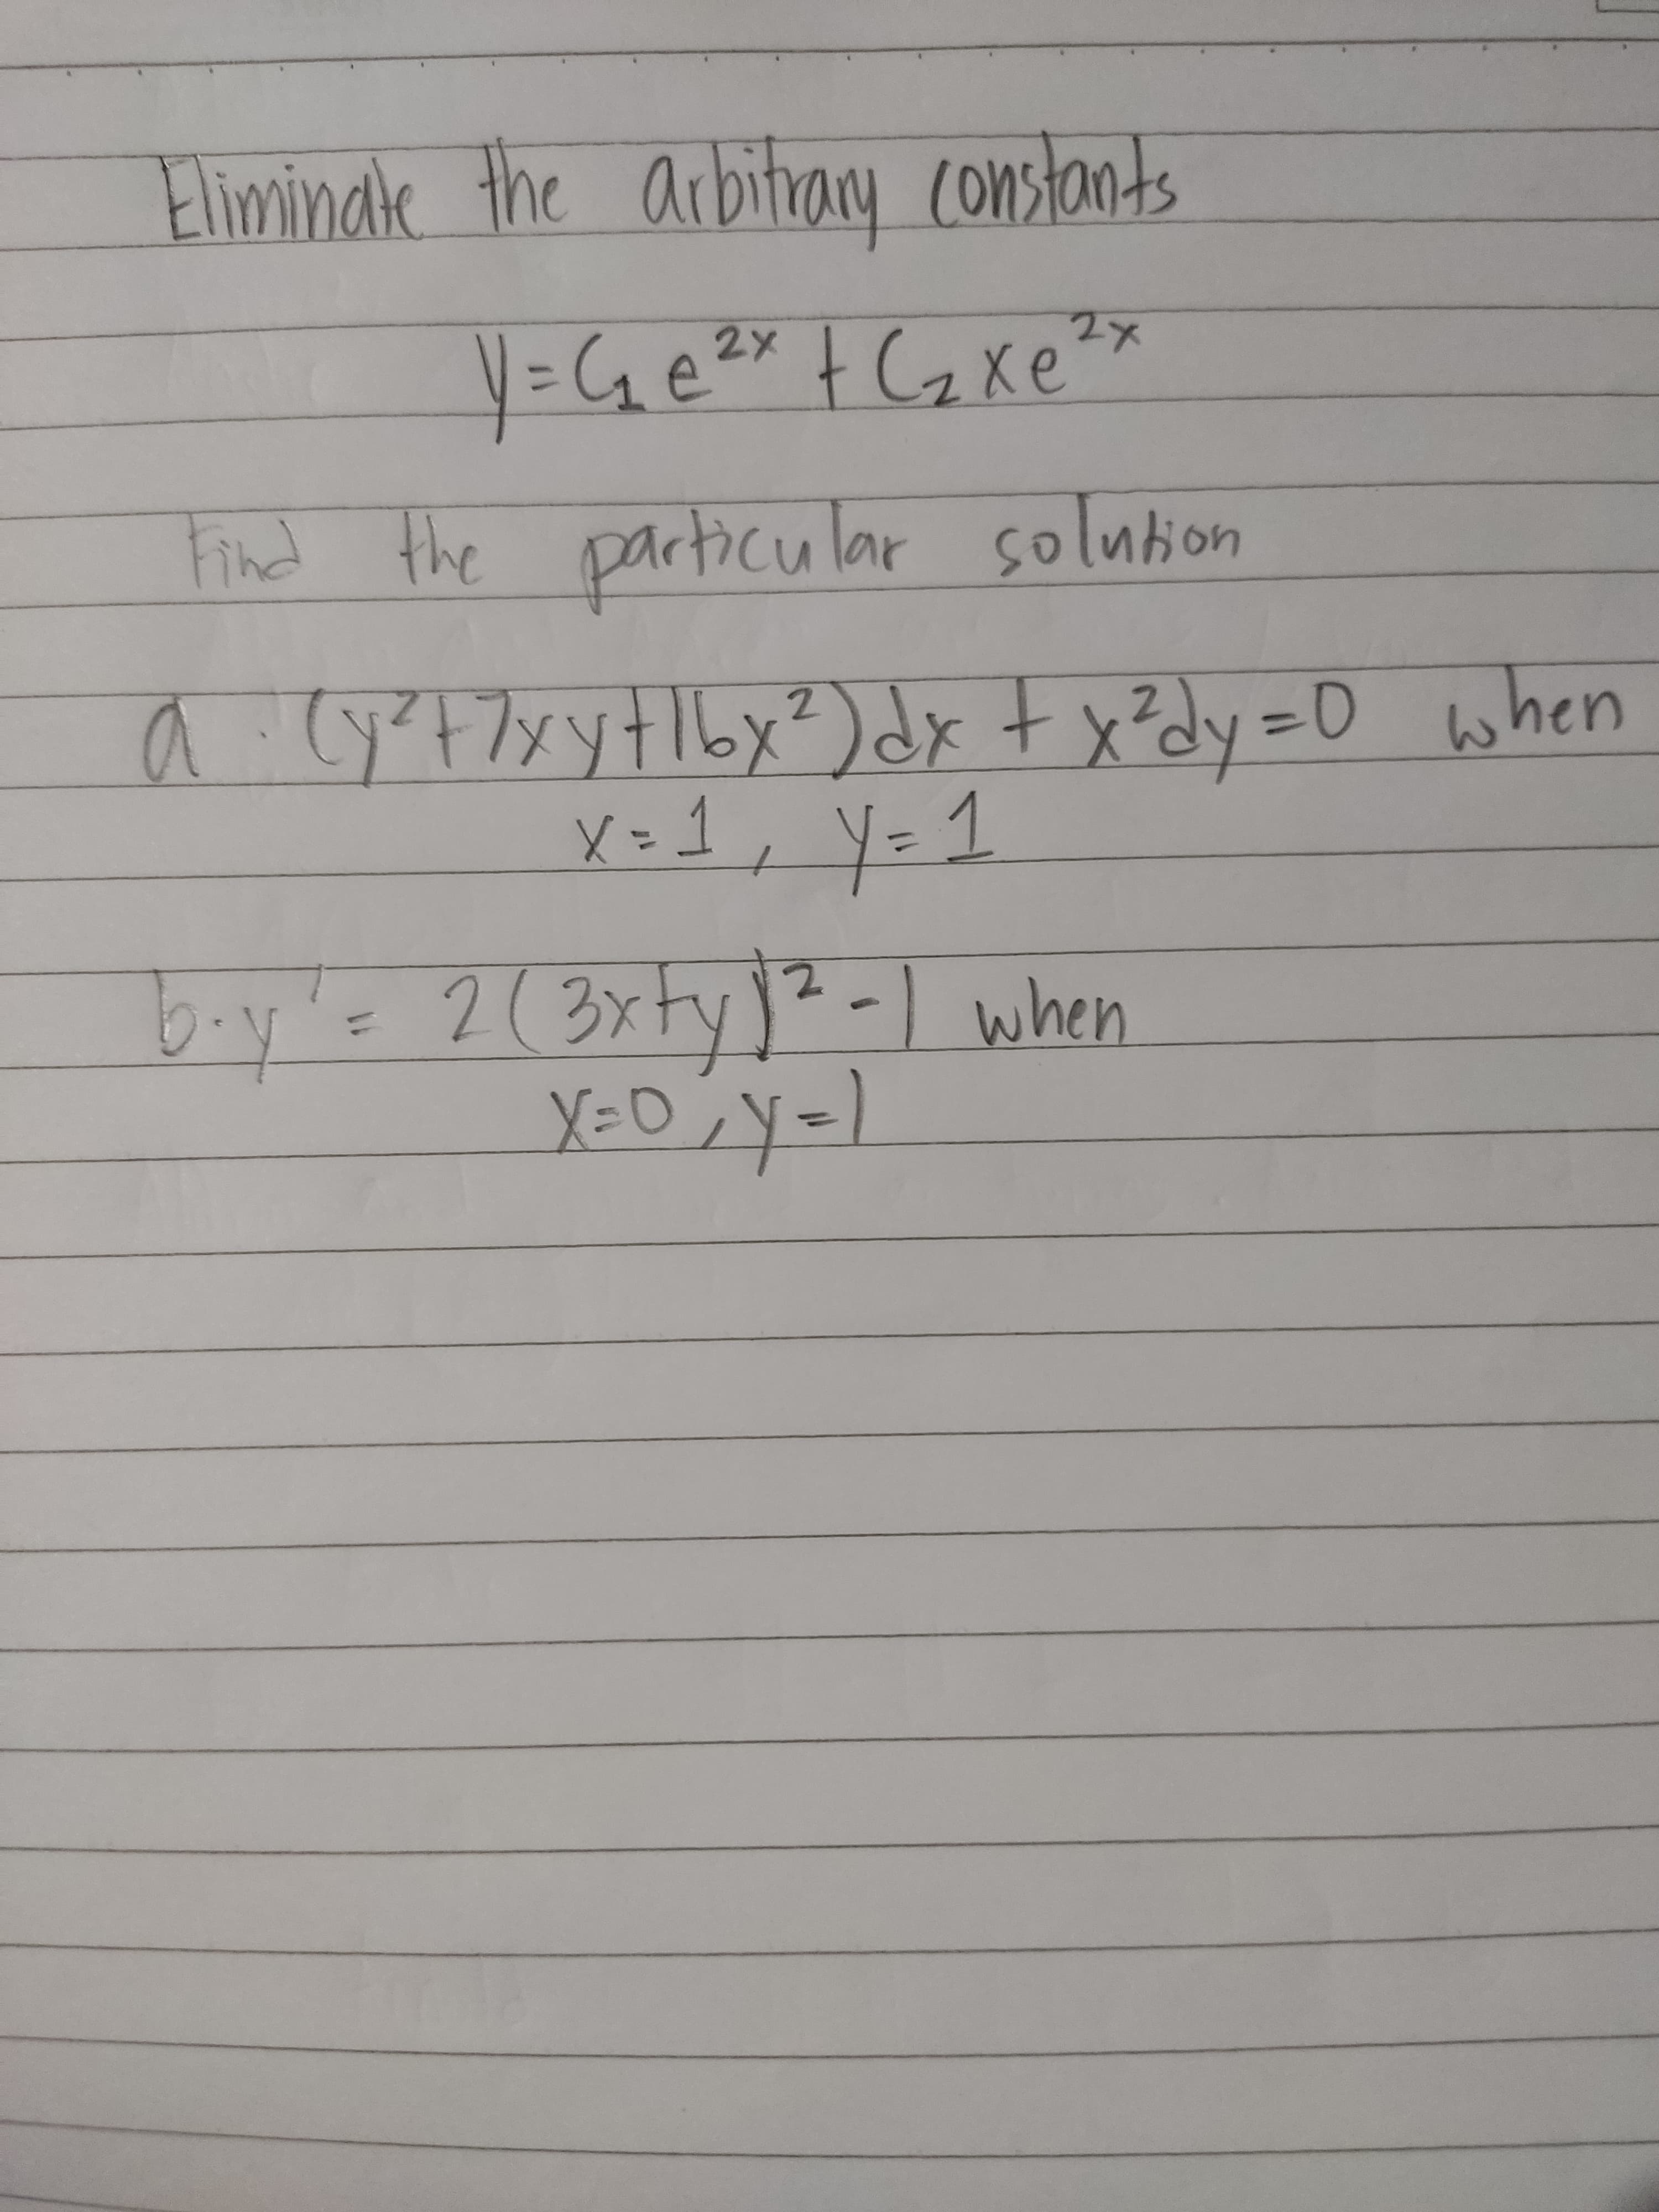 iminate
he
constants
メ2
Irticular
メて
solution
b.y's
D.
Tート ス
X=1
2.
2(3xty]?-1 when
XD0
[-大ax
